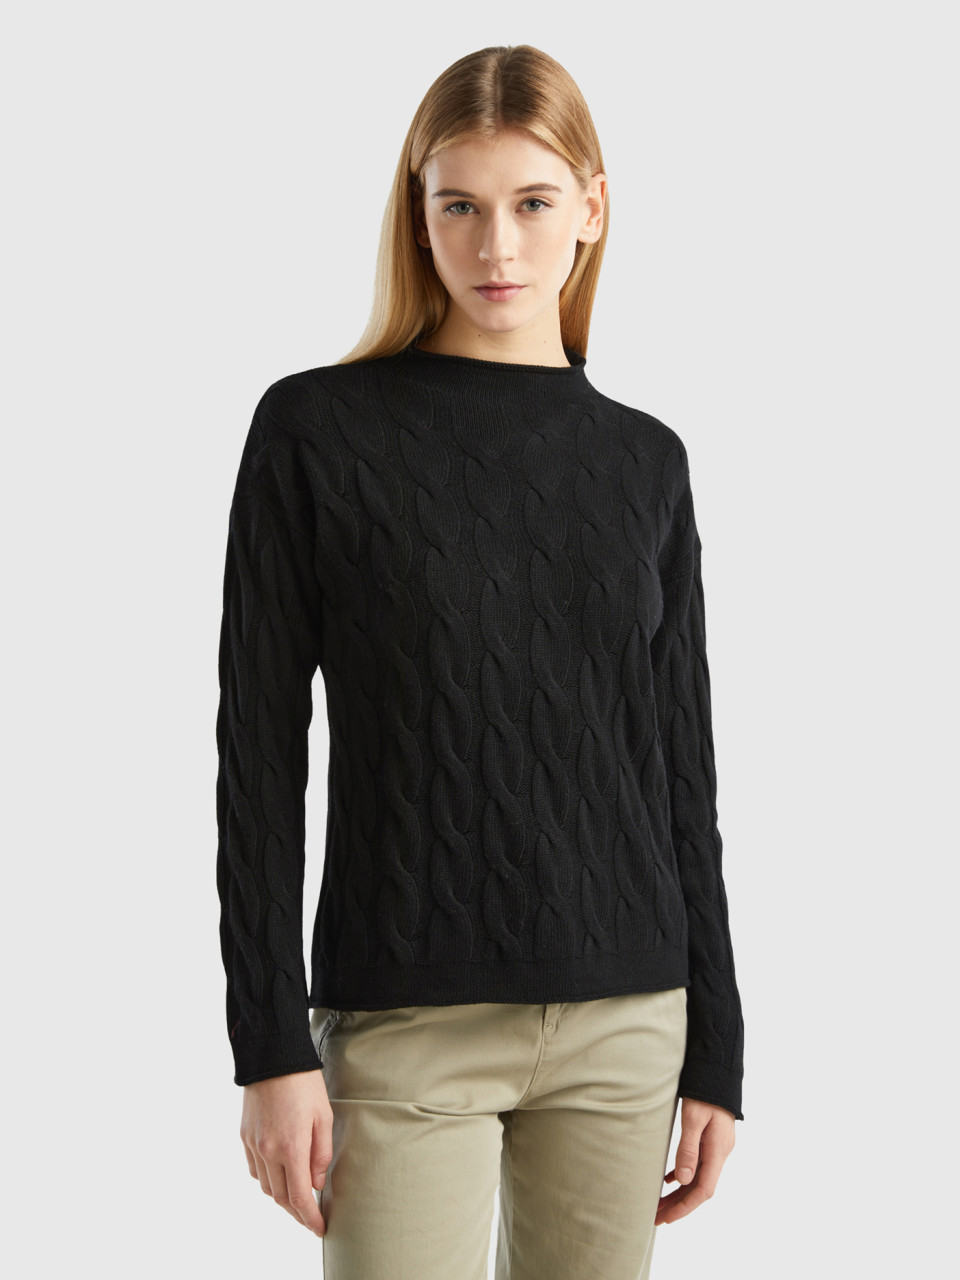 Benetton, Cable Knit Sweater, Black, Women